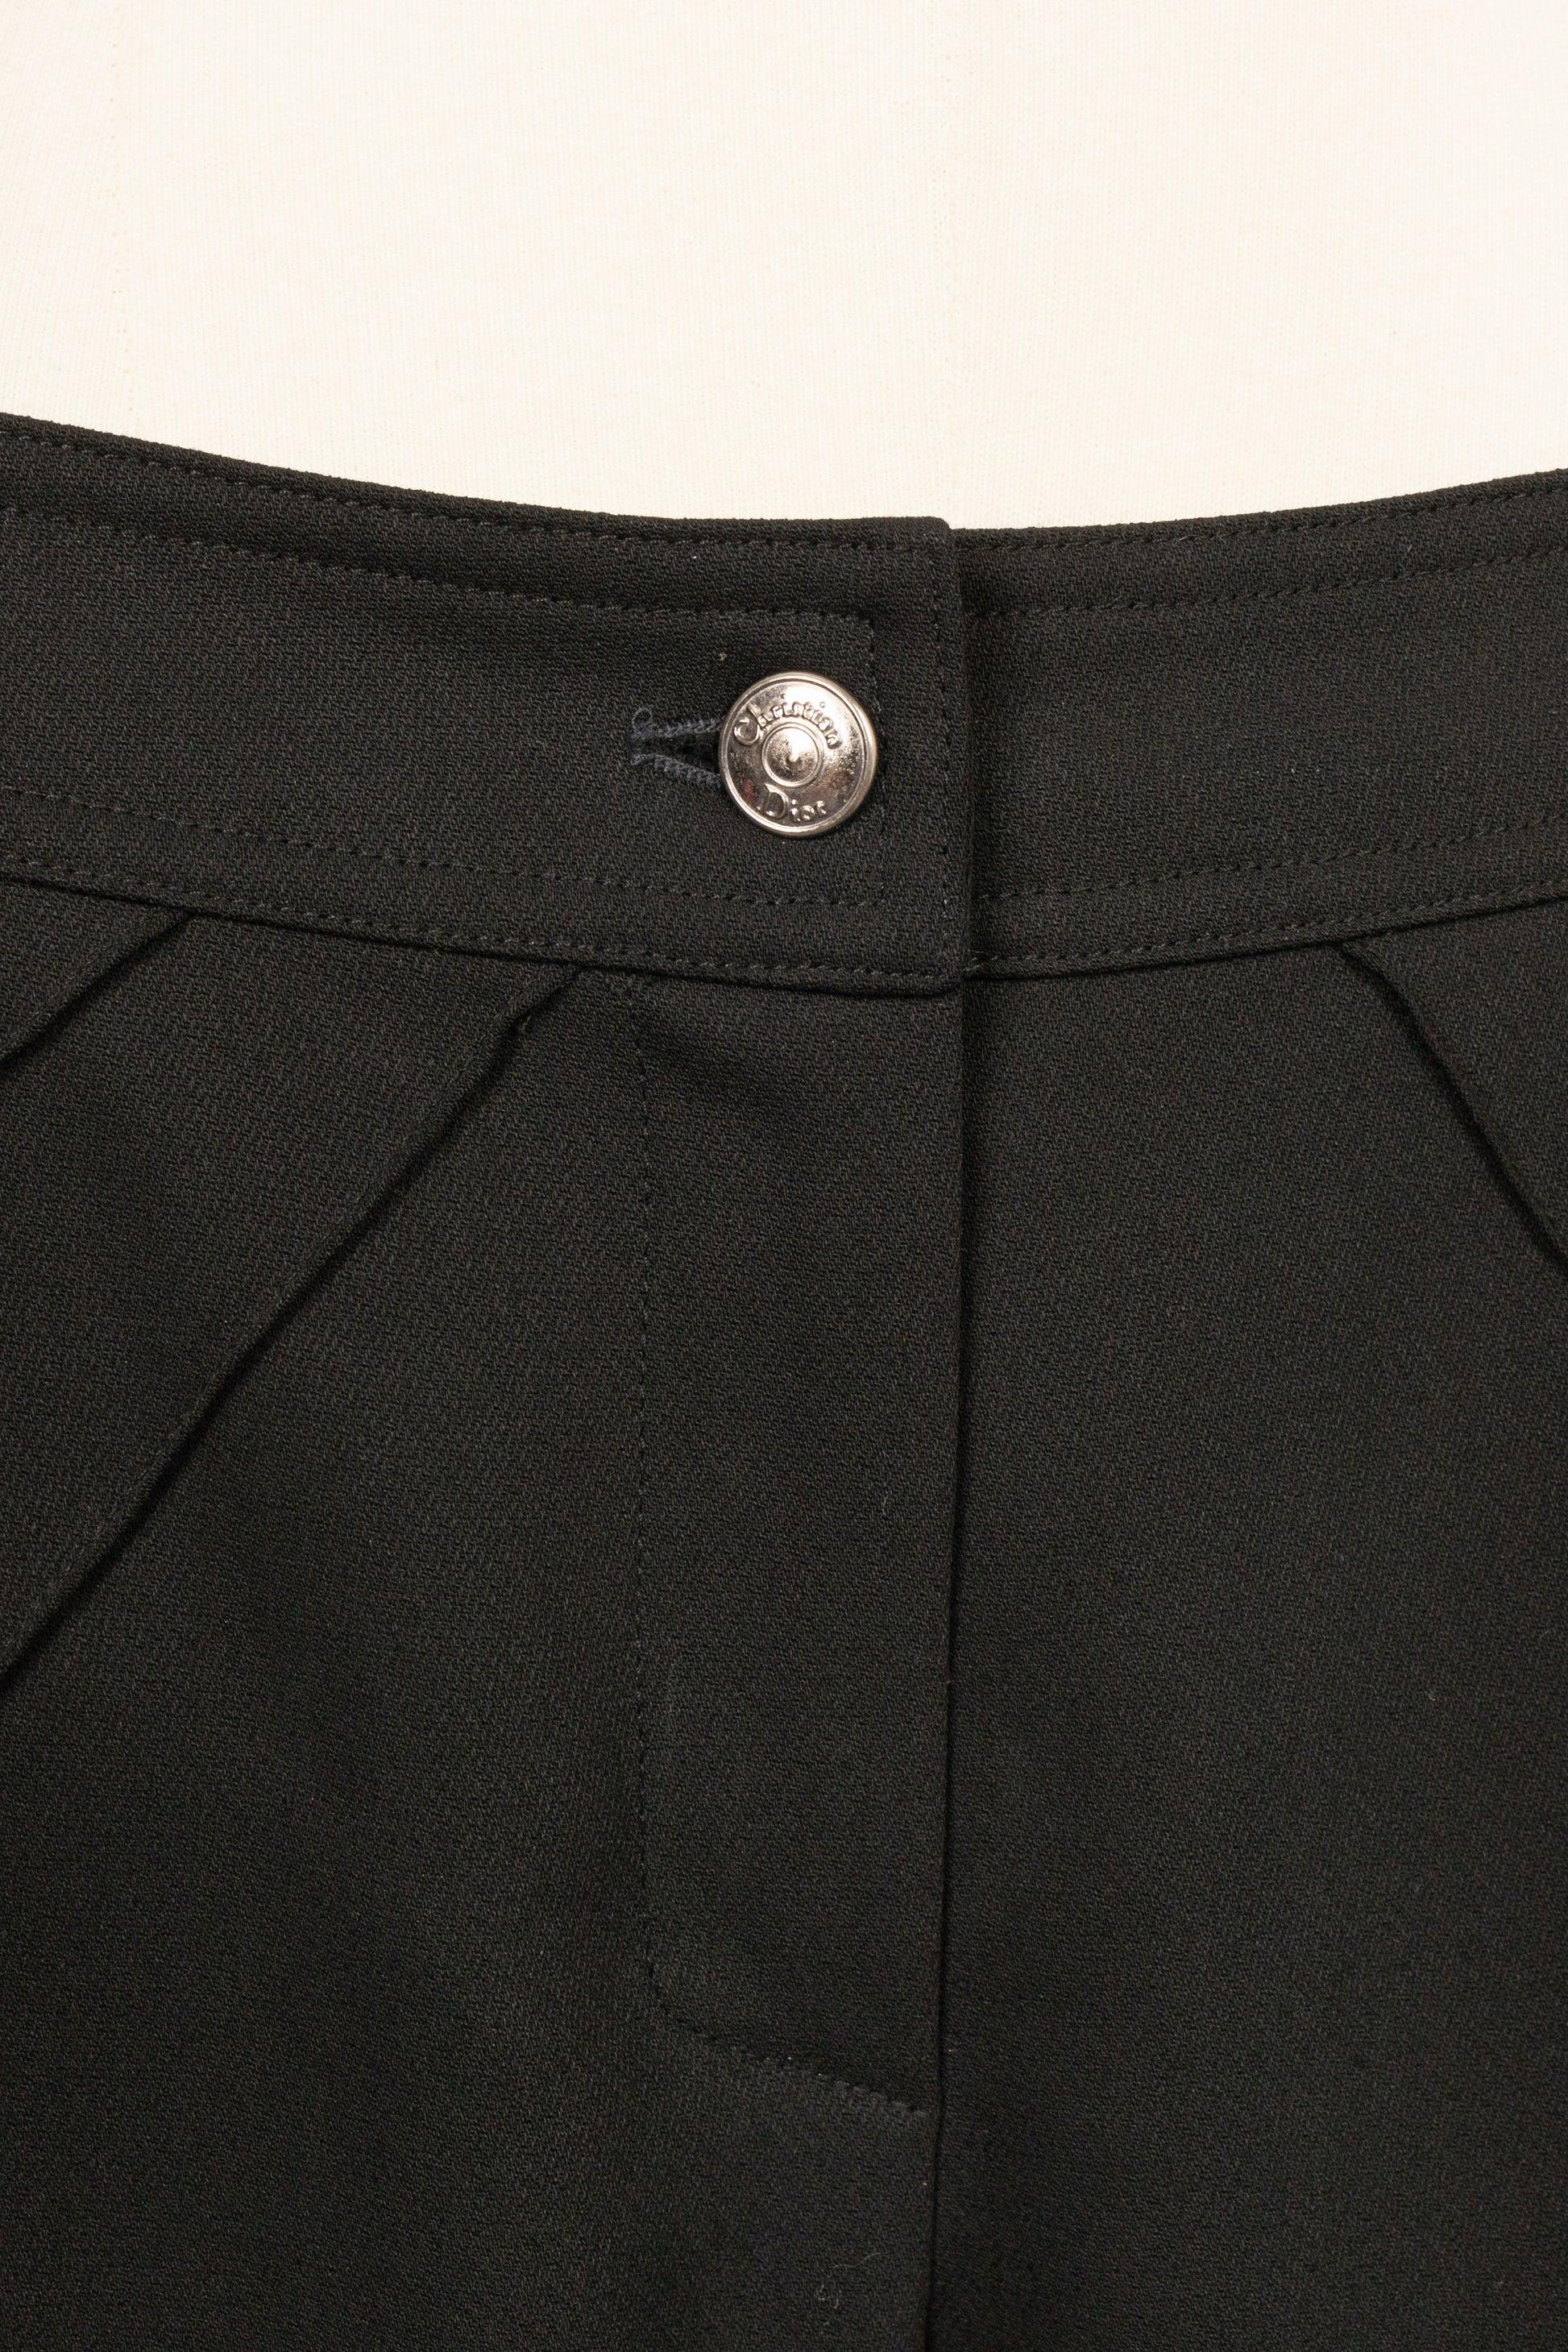 Christian Dior Black Blended Wool Pants, 2000's For Sale 1